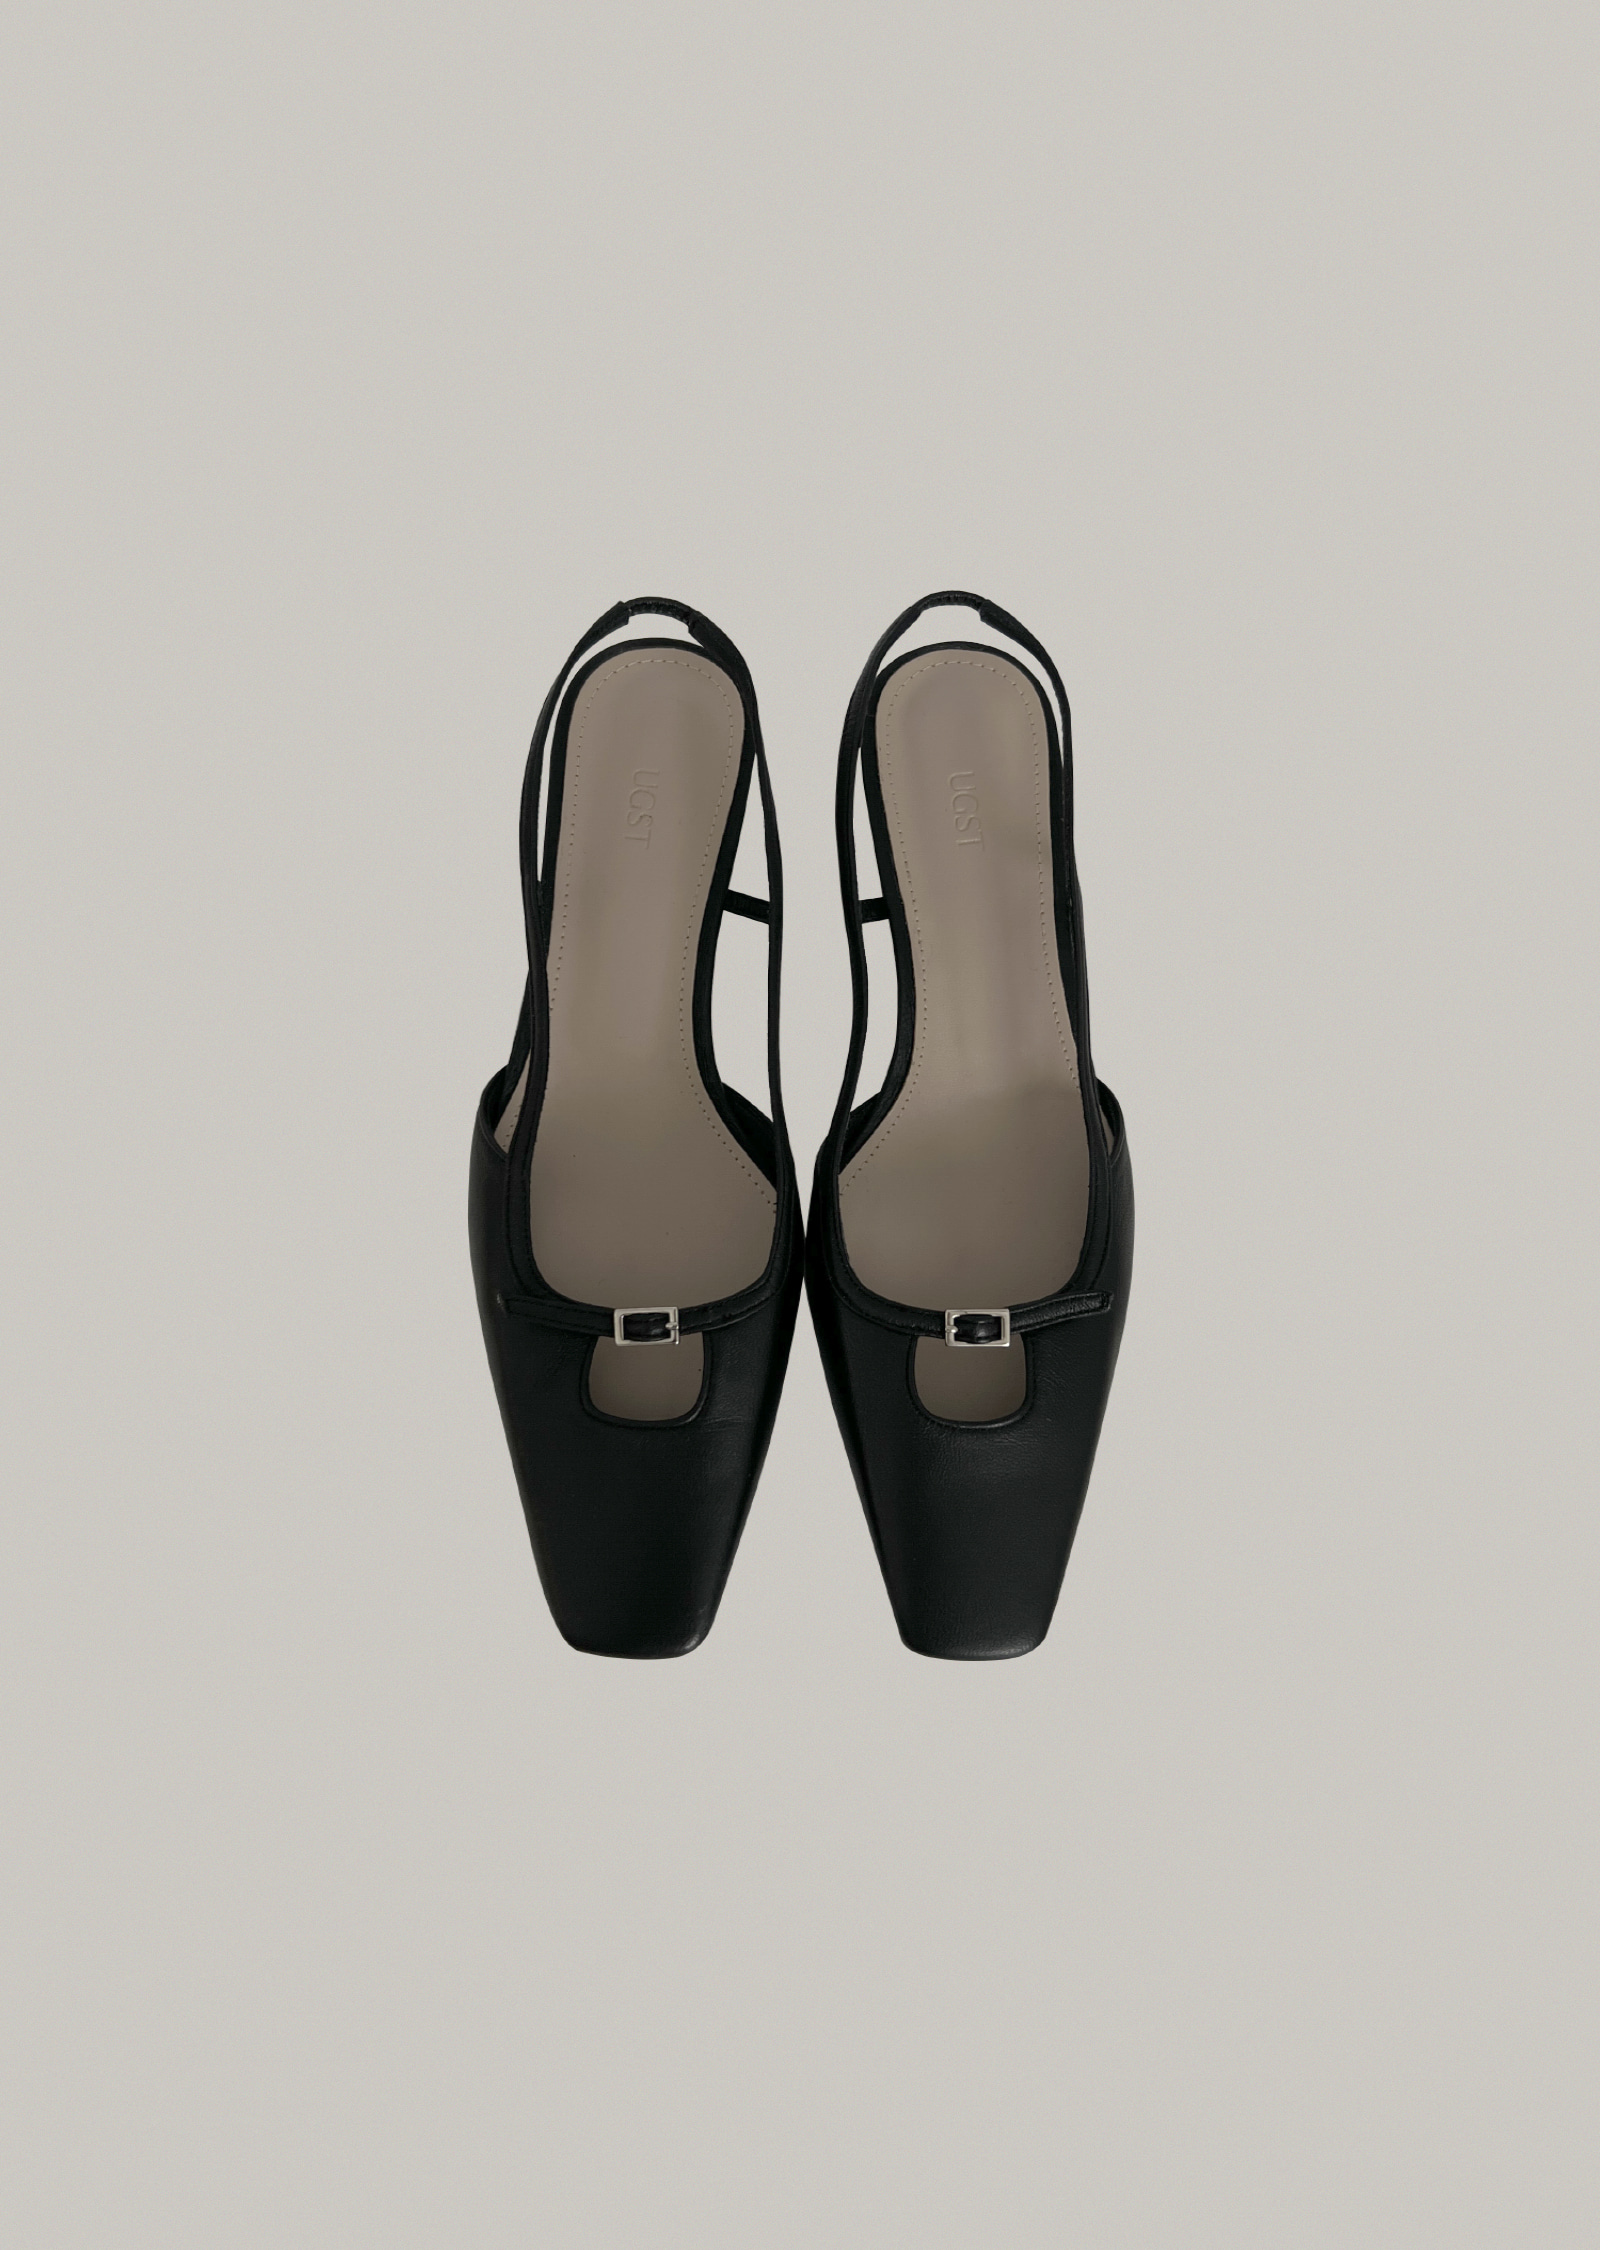 buckle sling back heel (black)